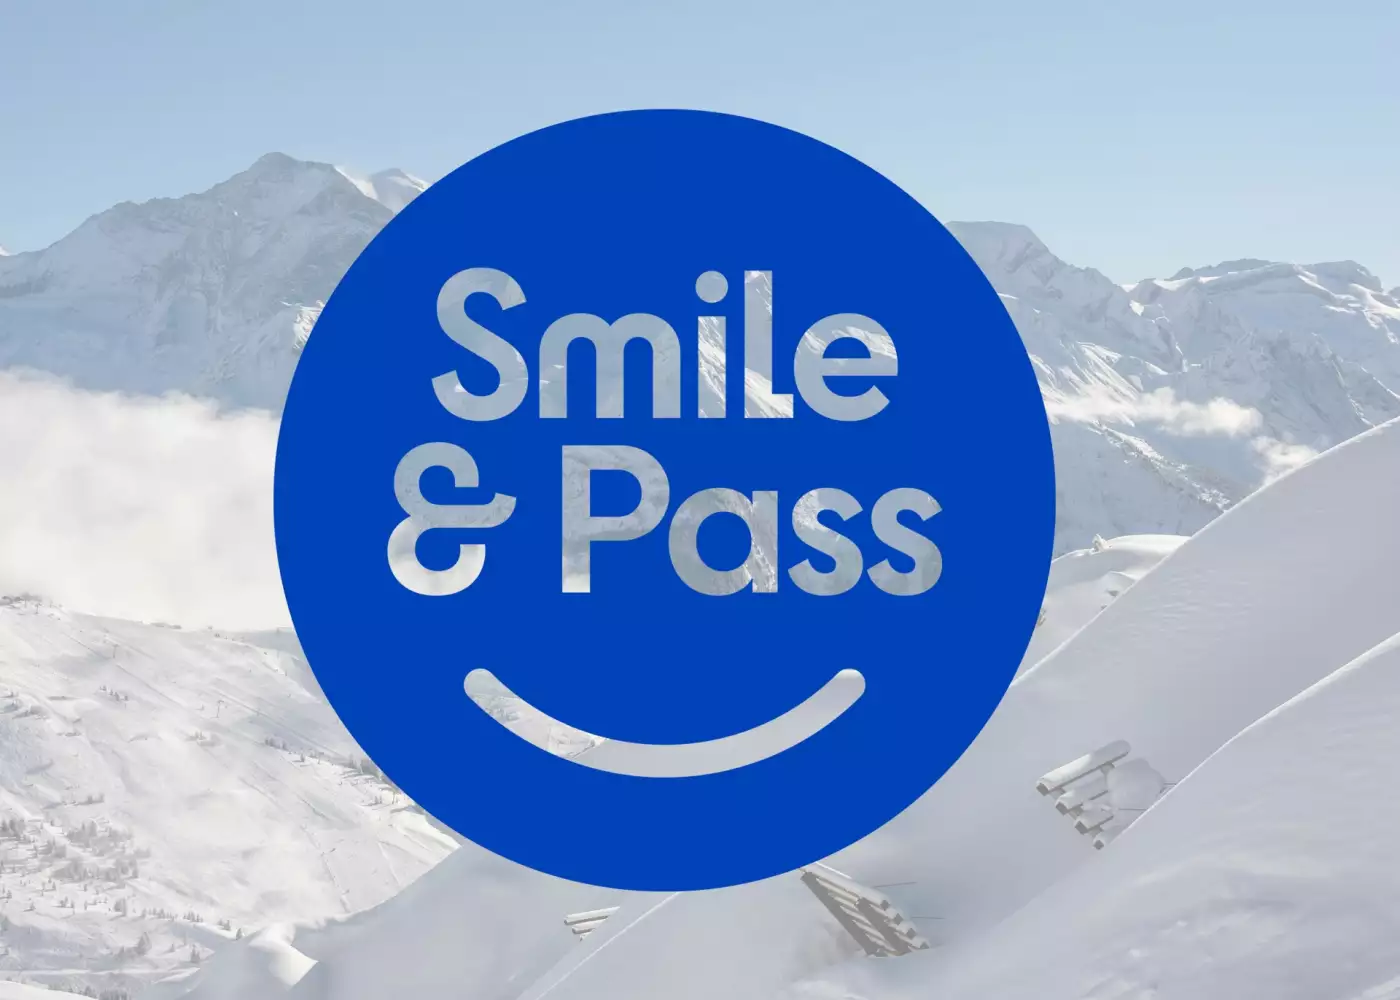 Smile&Pass by Mountain Collection La Plagne